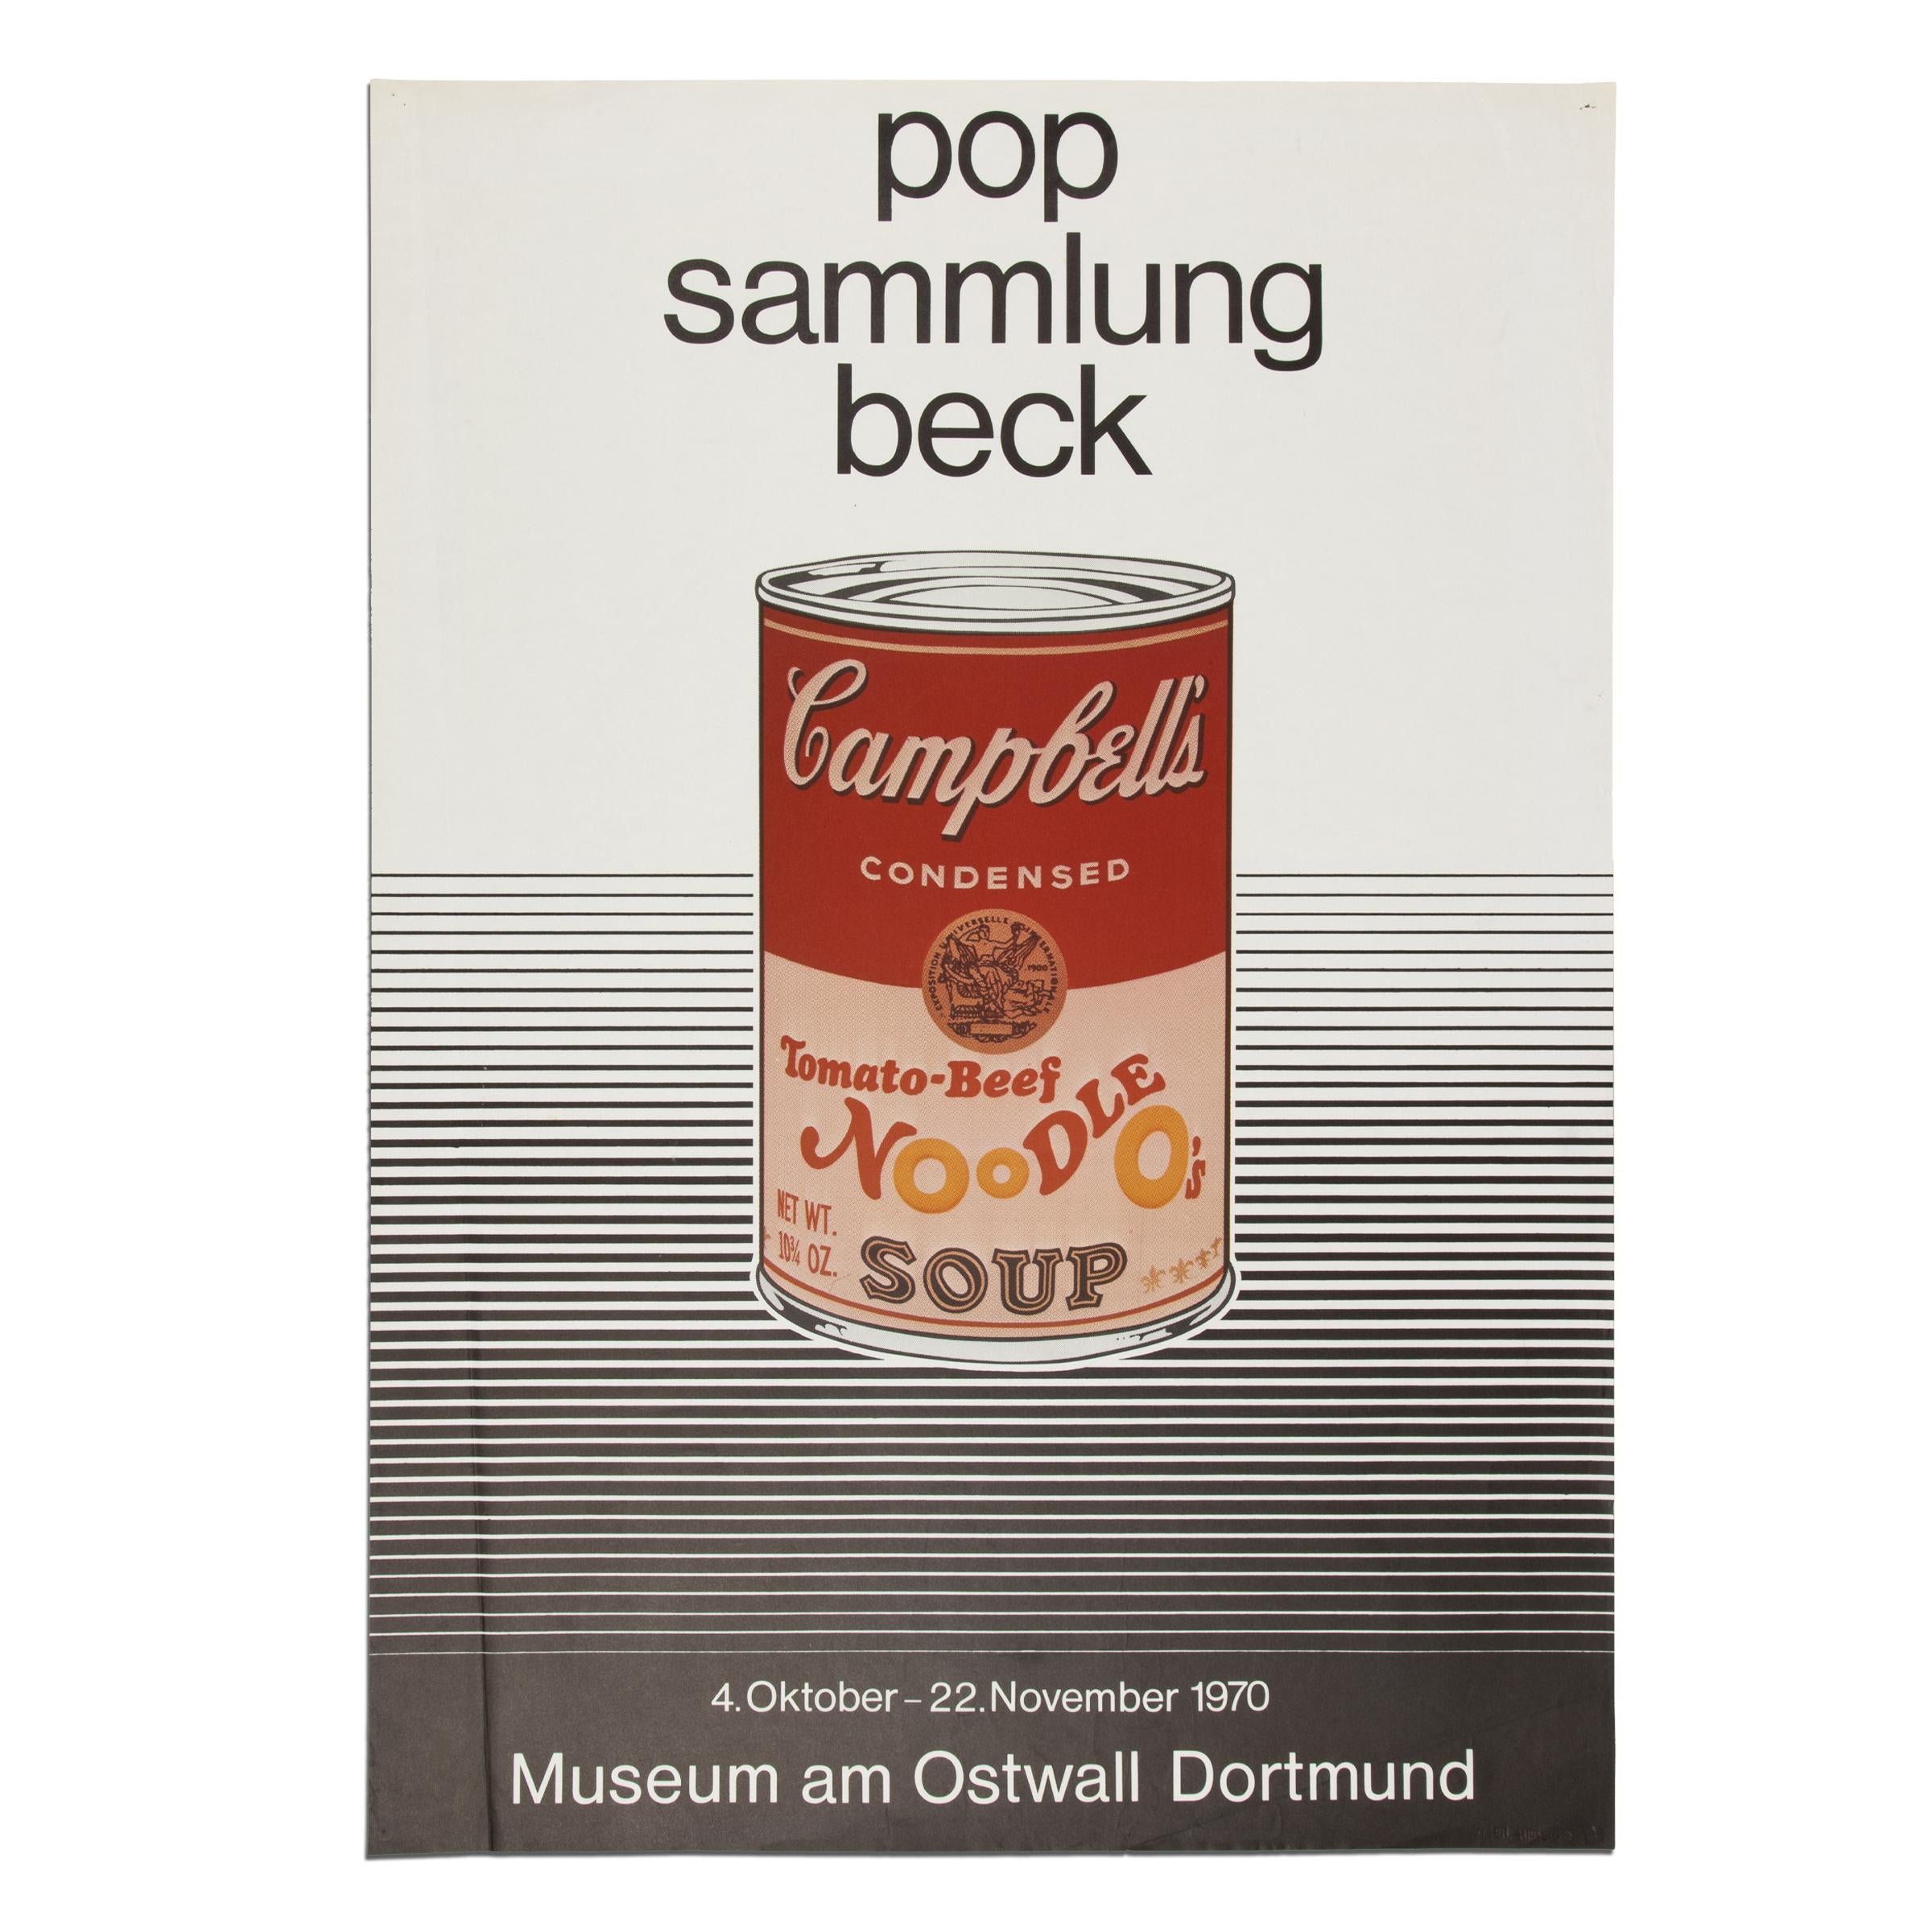 Original poster for the pop art exhibition "Pop Sammlung Beck" at Museum am Ostwall in Dortmund from 4 October - 22 November 1970. 

Pop Sammlung Beck was a major Pop Art collection by the German lawyer Heinz Beck, based in Düsseldorf. The